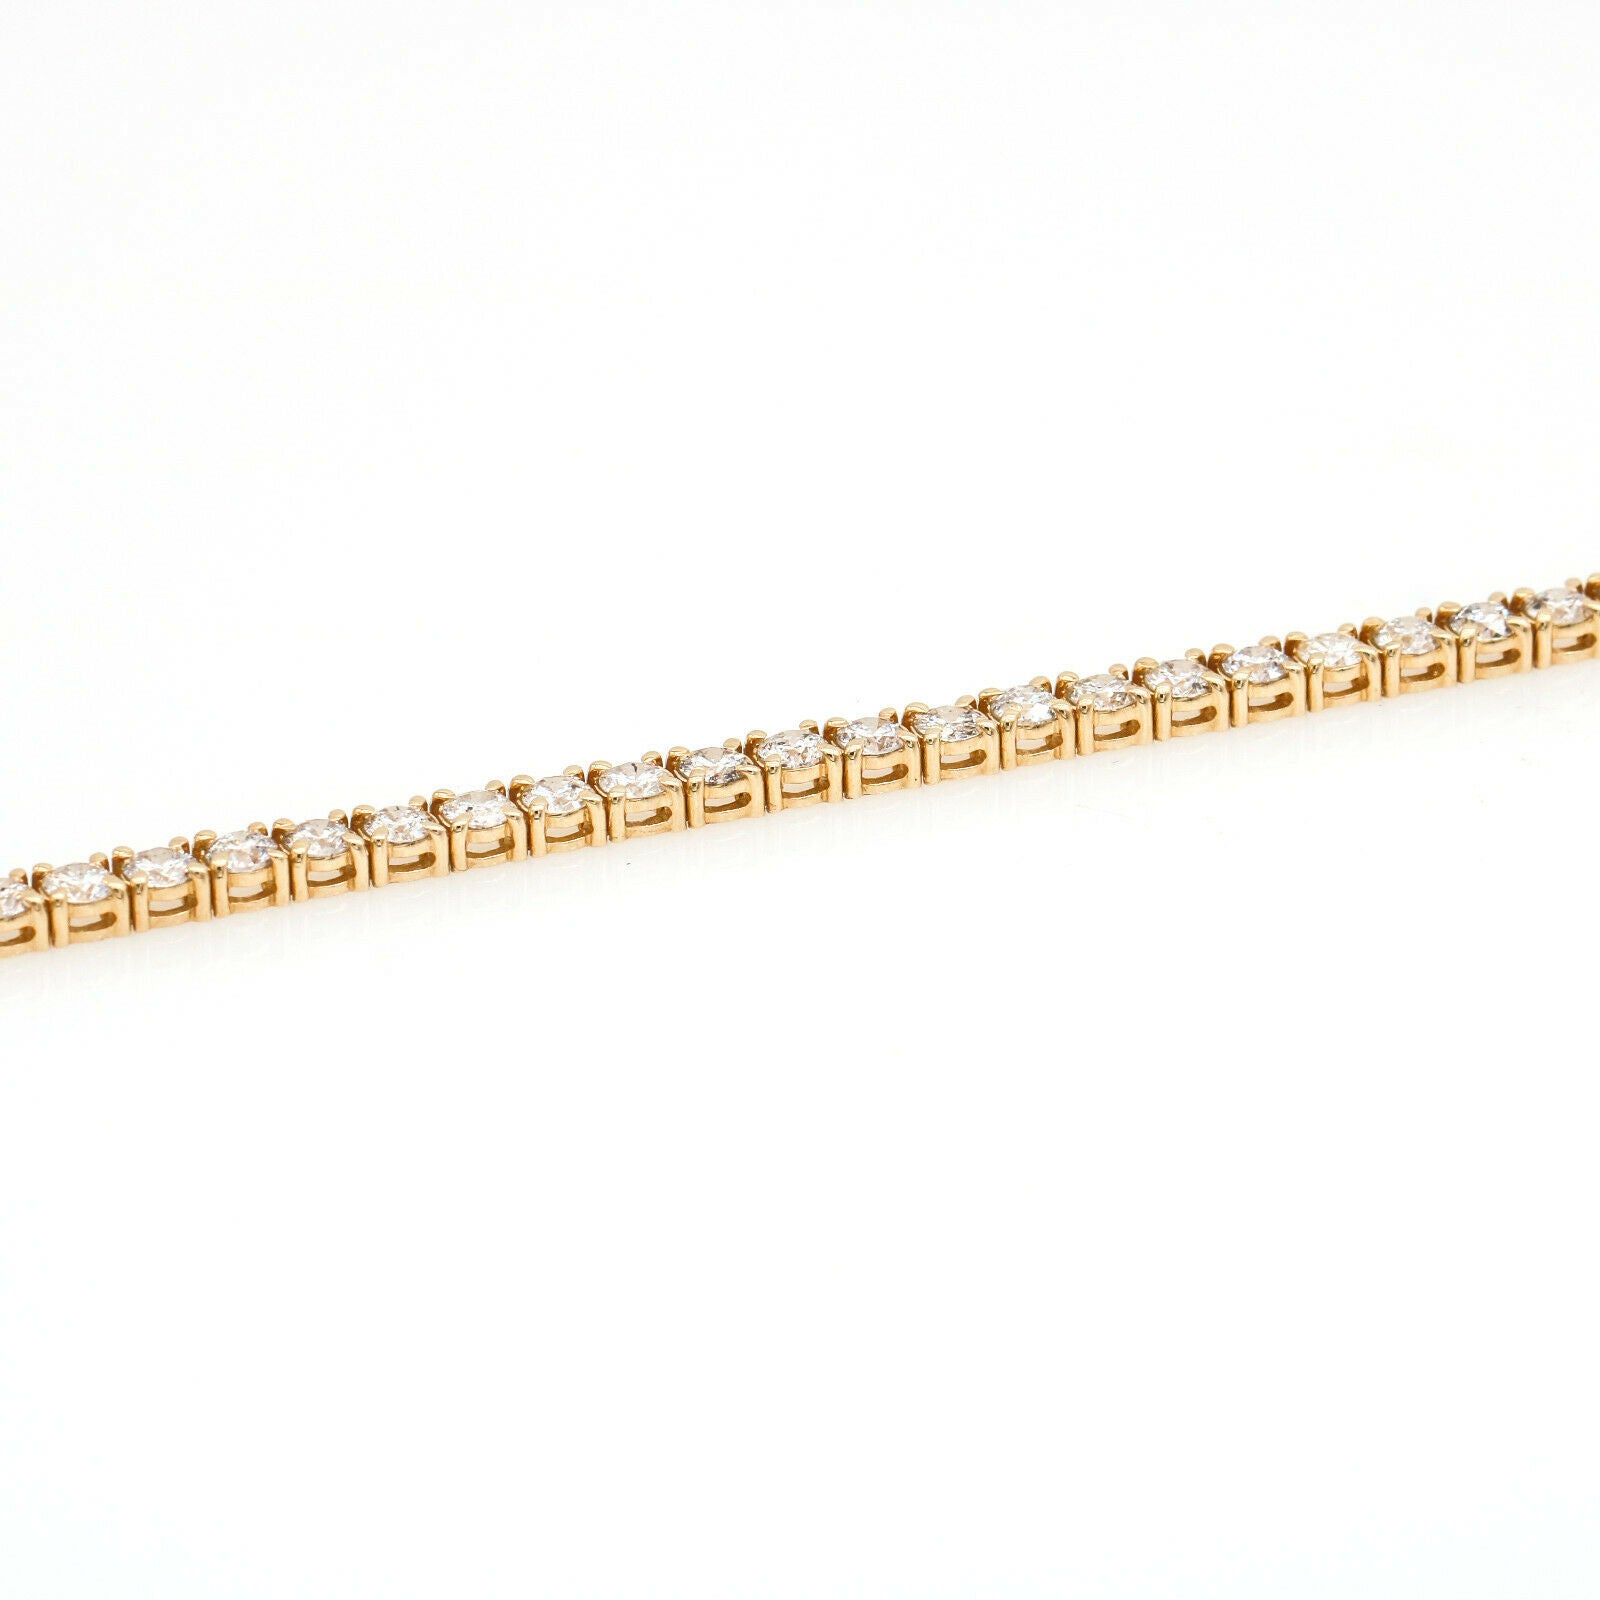 10.00 ct Diamond Tennis Bracelet in 14k Yellow Gold